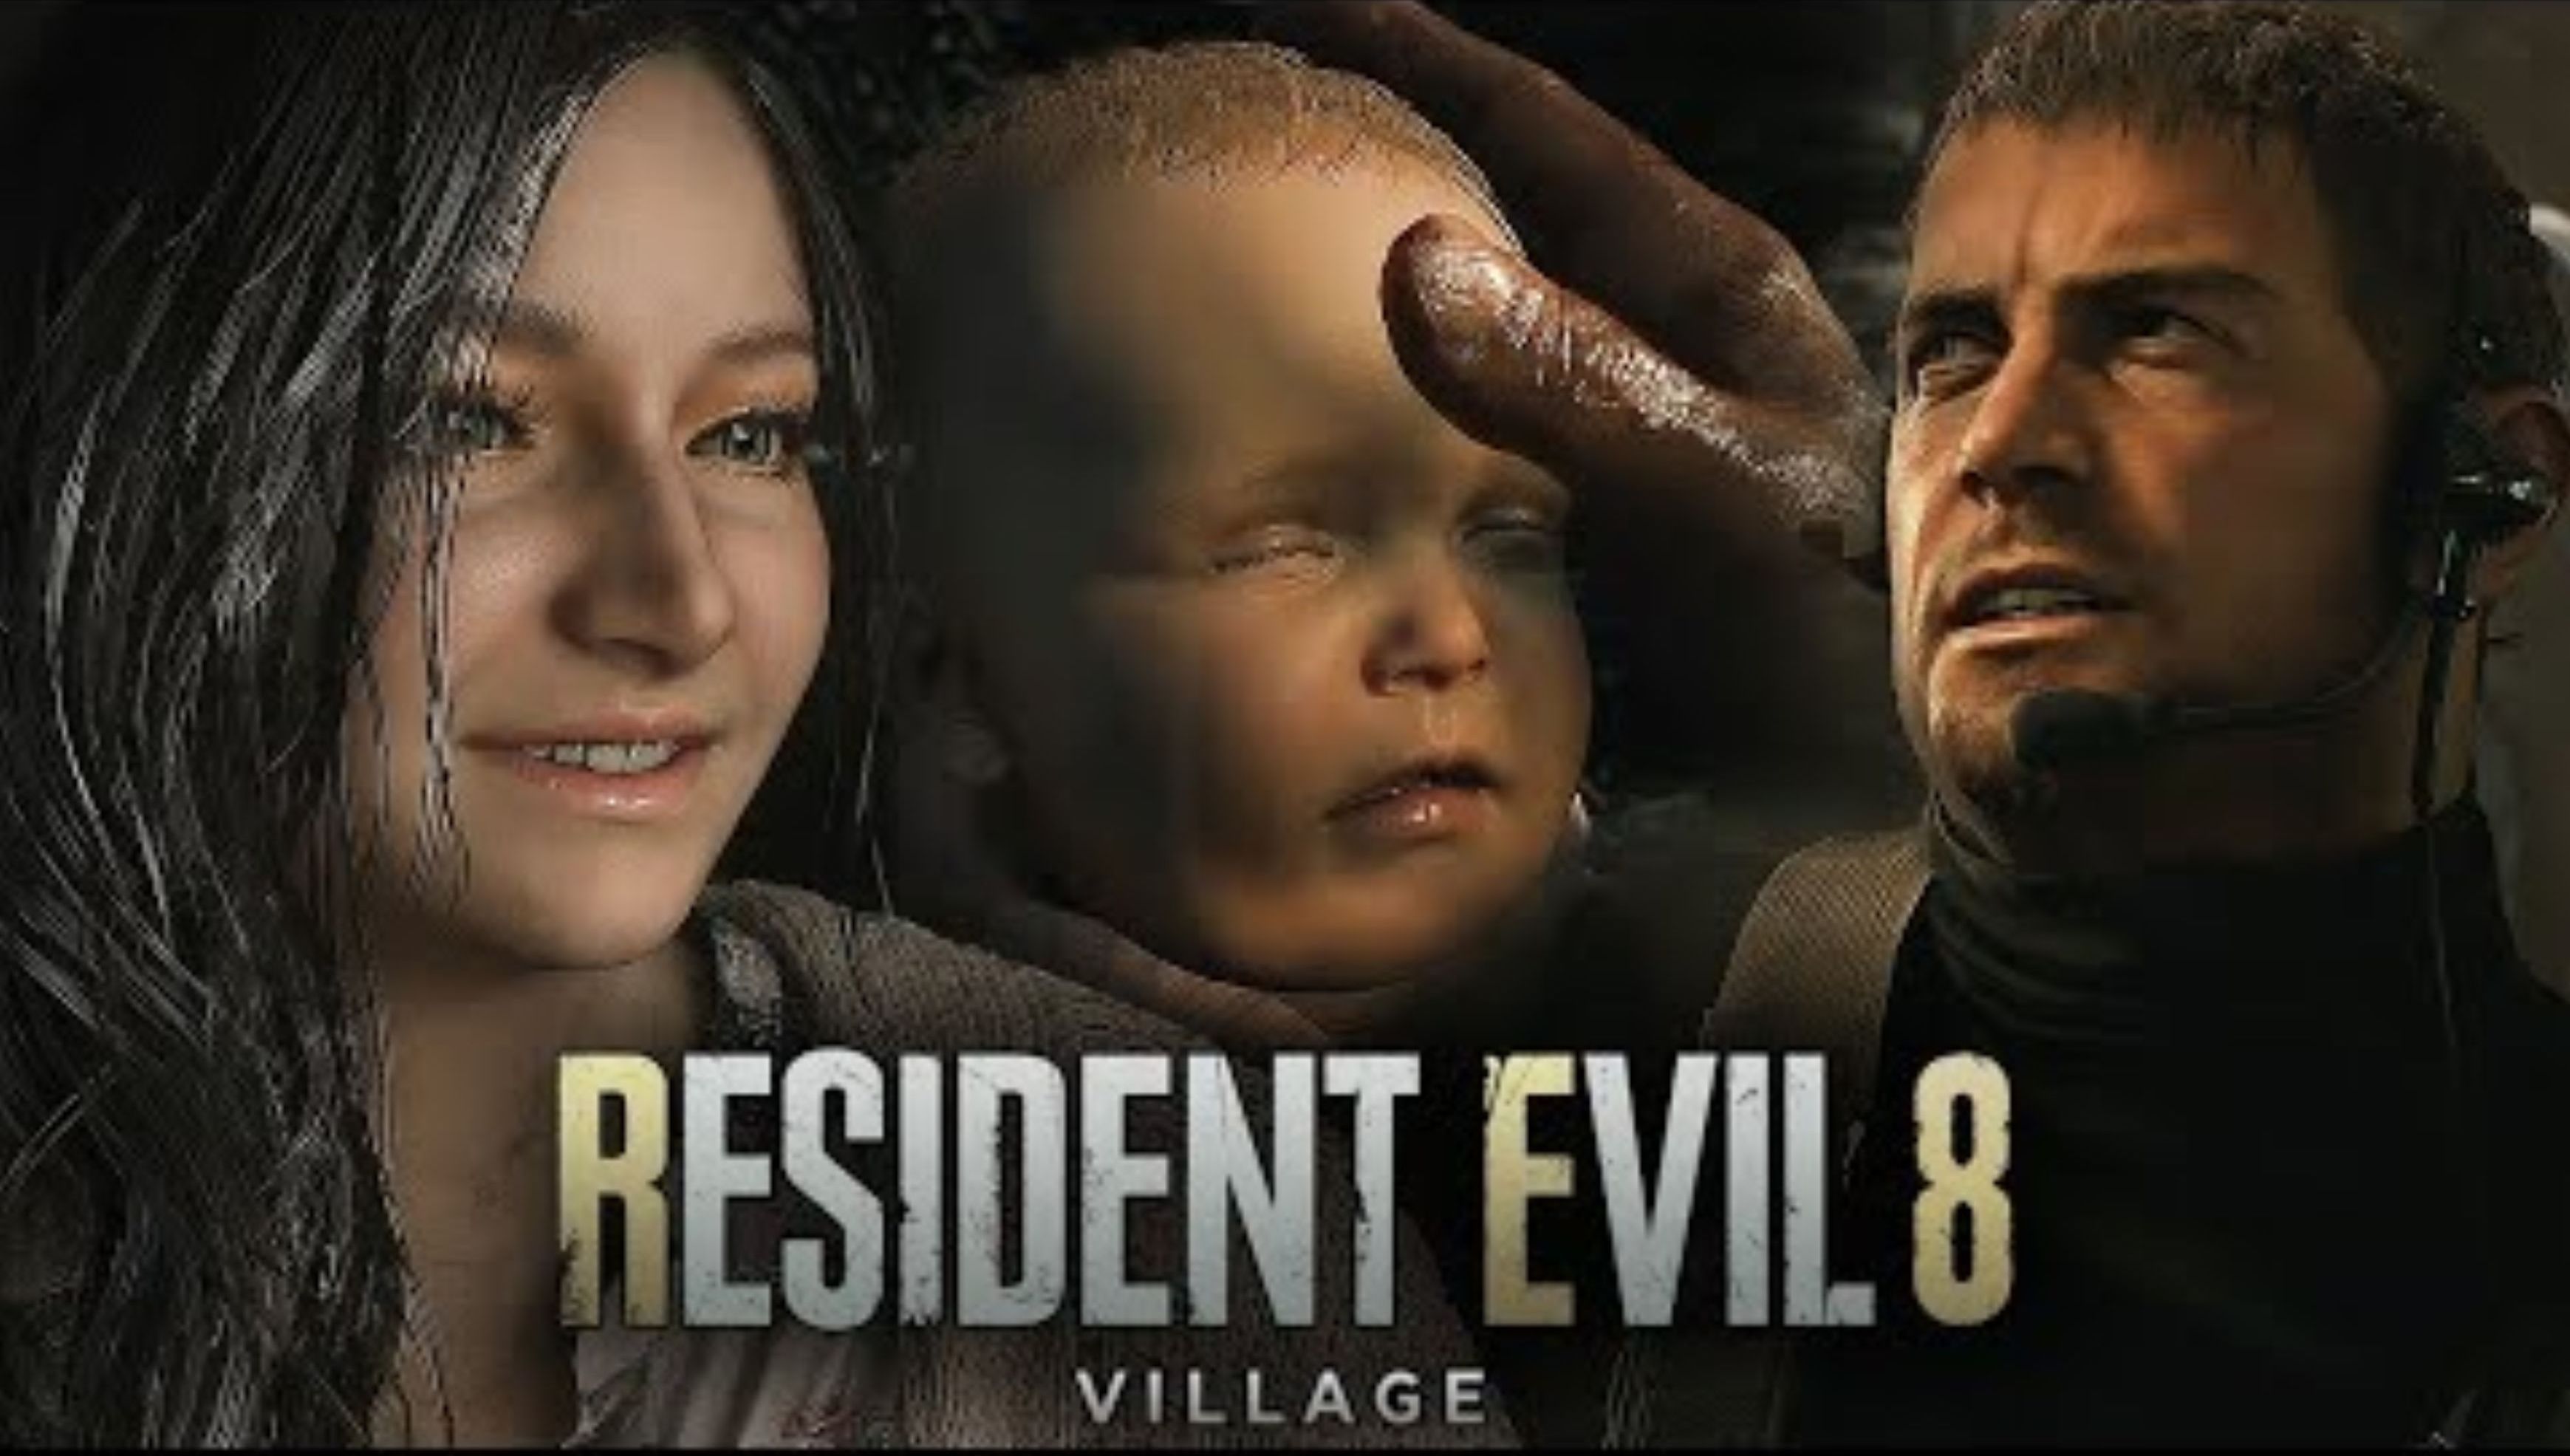 ФИНАЛЬНЫЙ БОСС_ МАТЕРЬ МИРАНДА ● Resident Evil_ Village #13